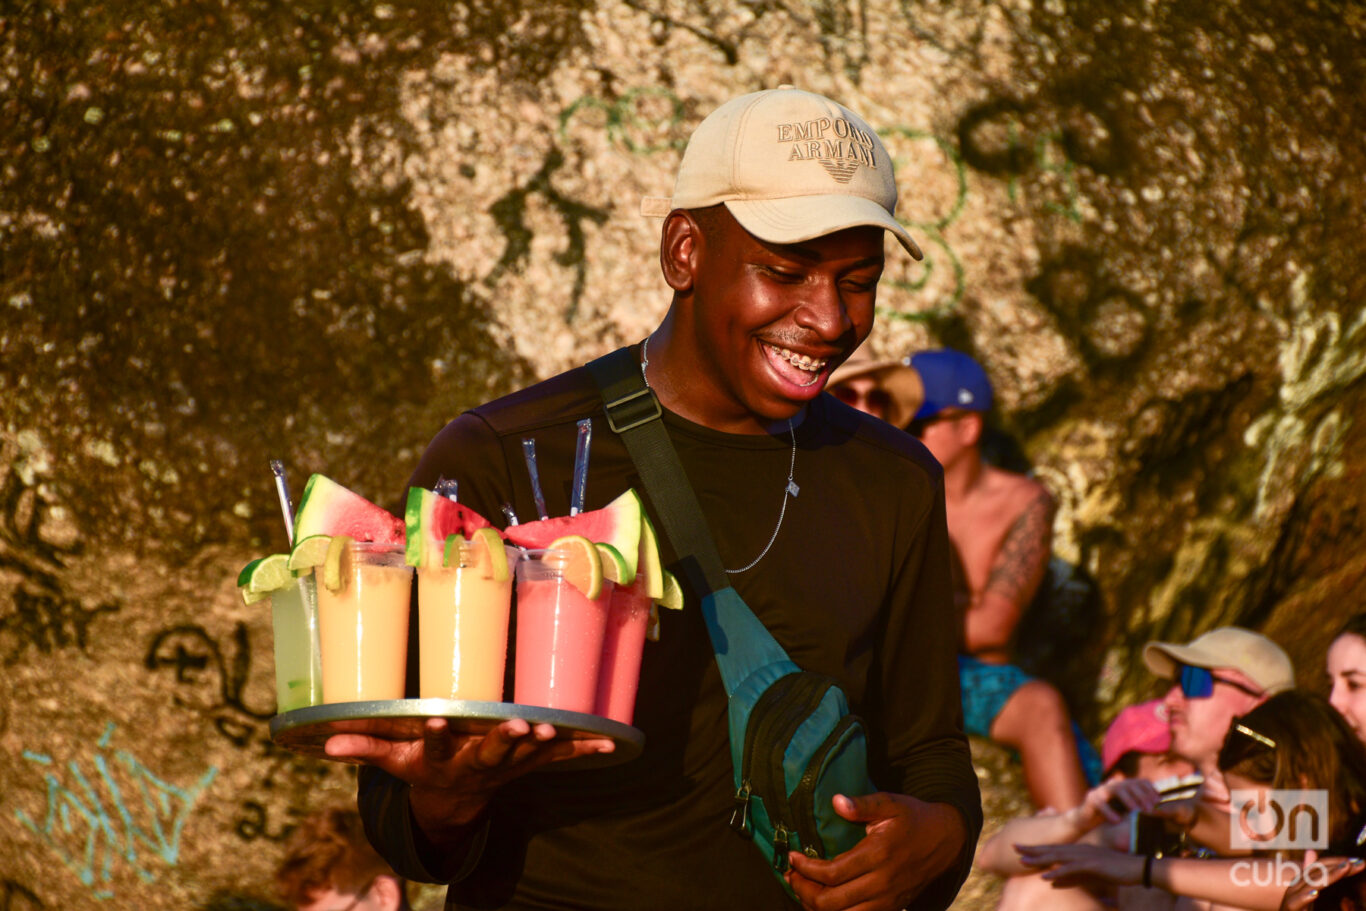 Vendedores ambulantes ofrecen caipirinha, agua de coco y cerveza. Foto: Kaloian.